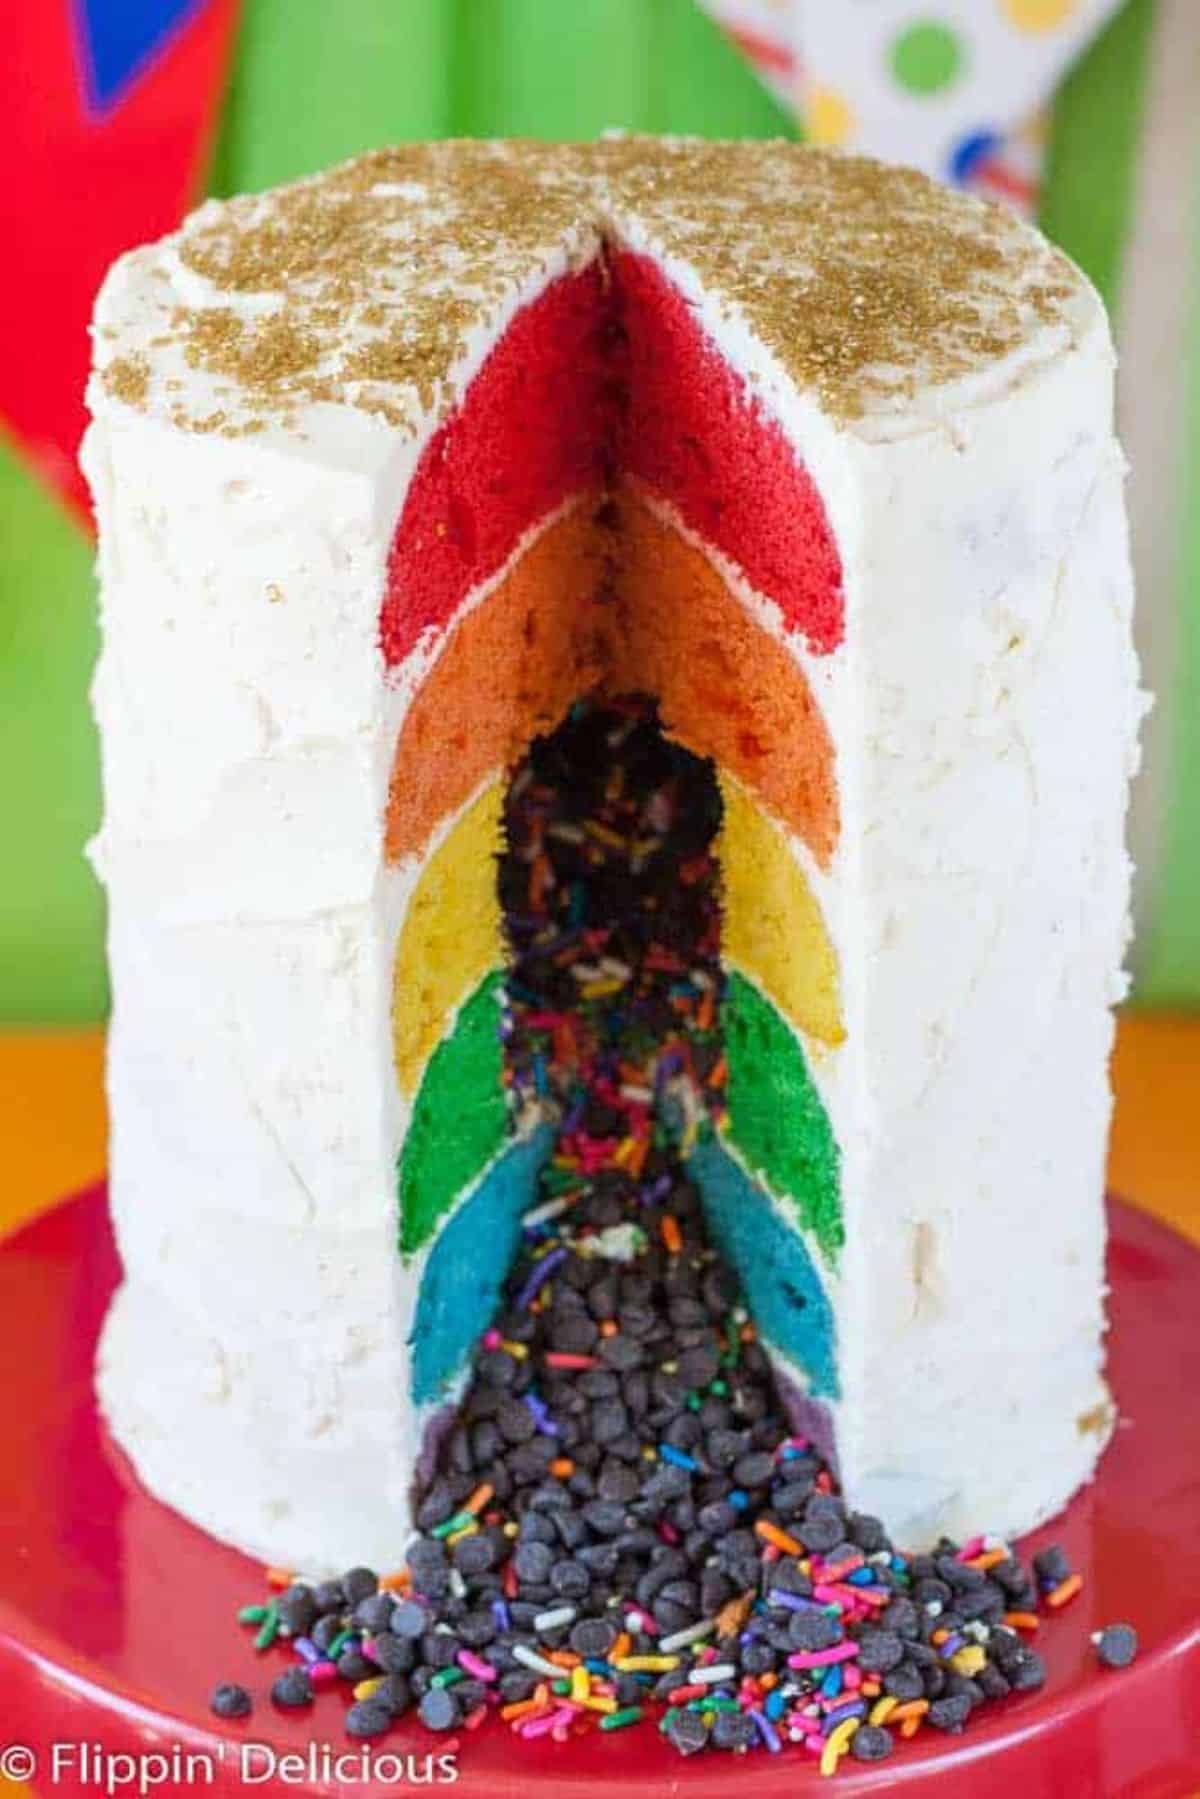 Delicious Gluten-Free Rainbow Cake on a cake tray.